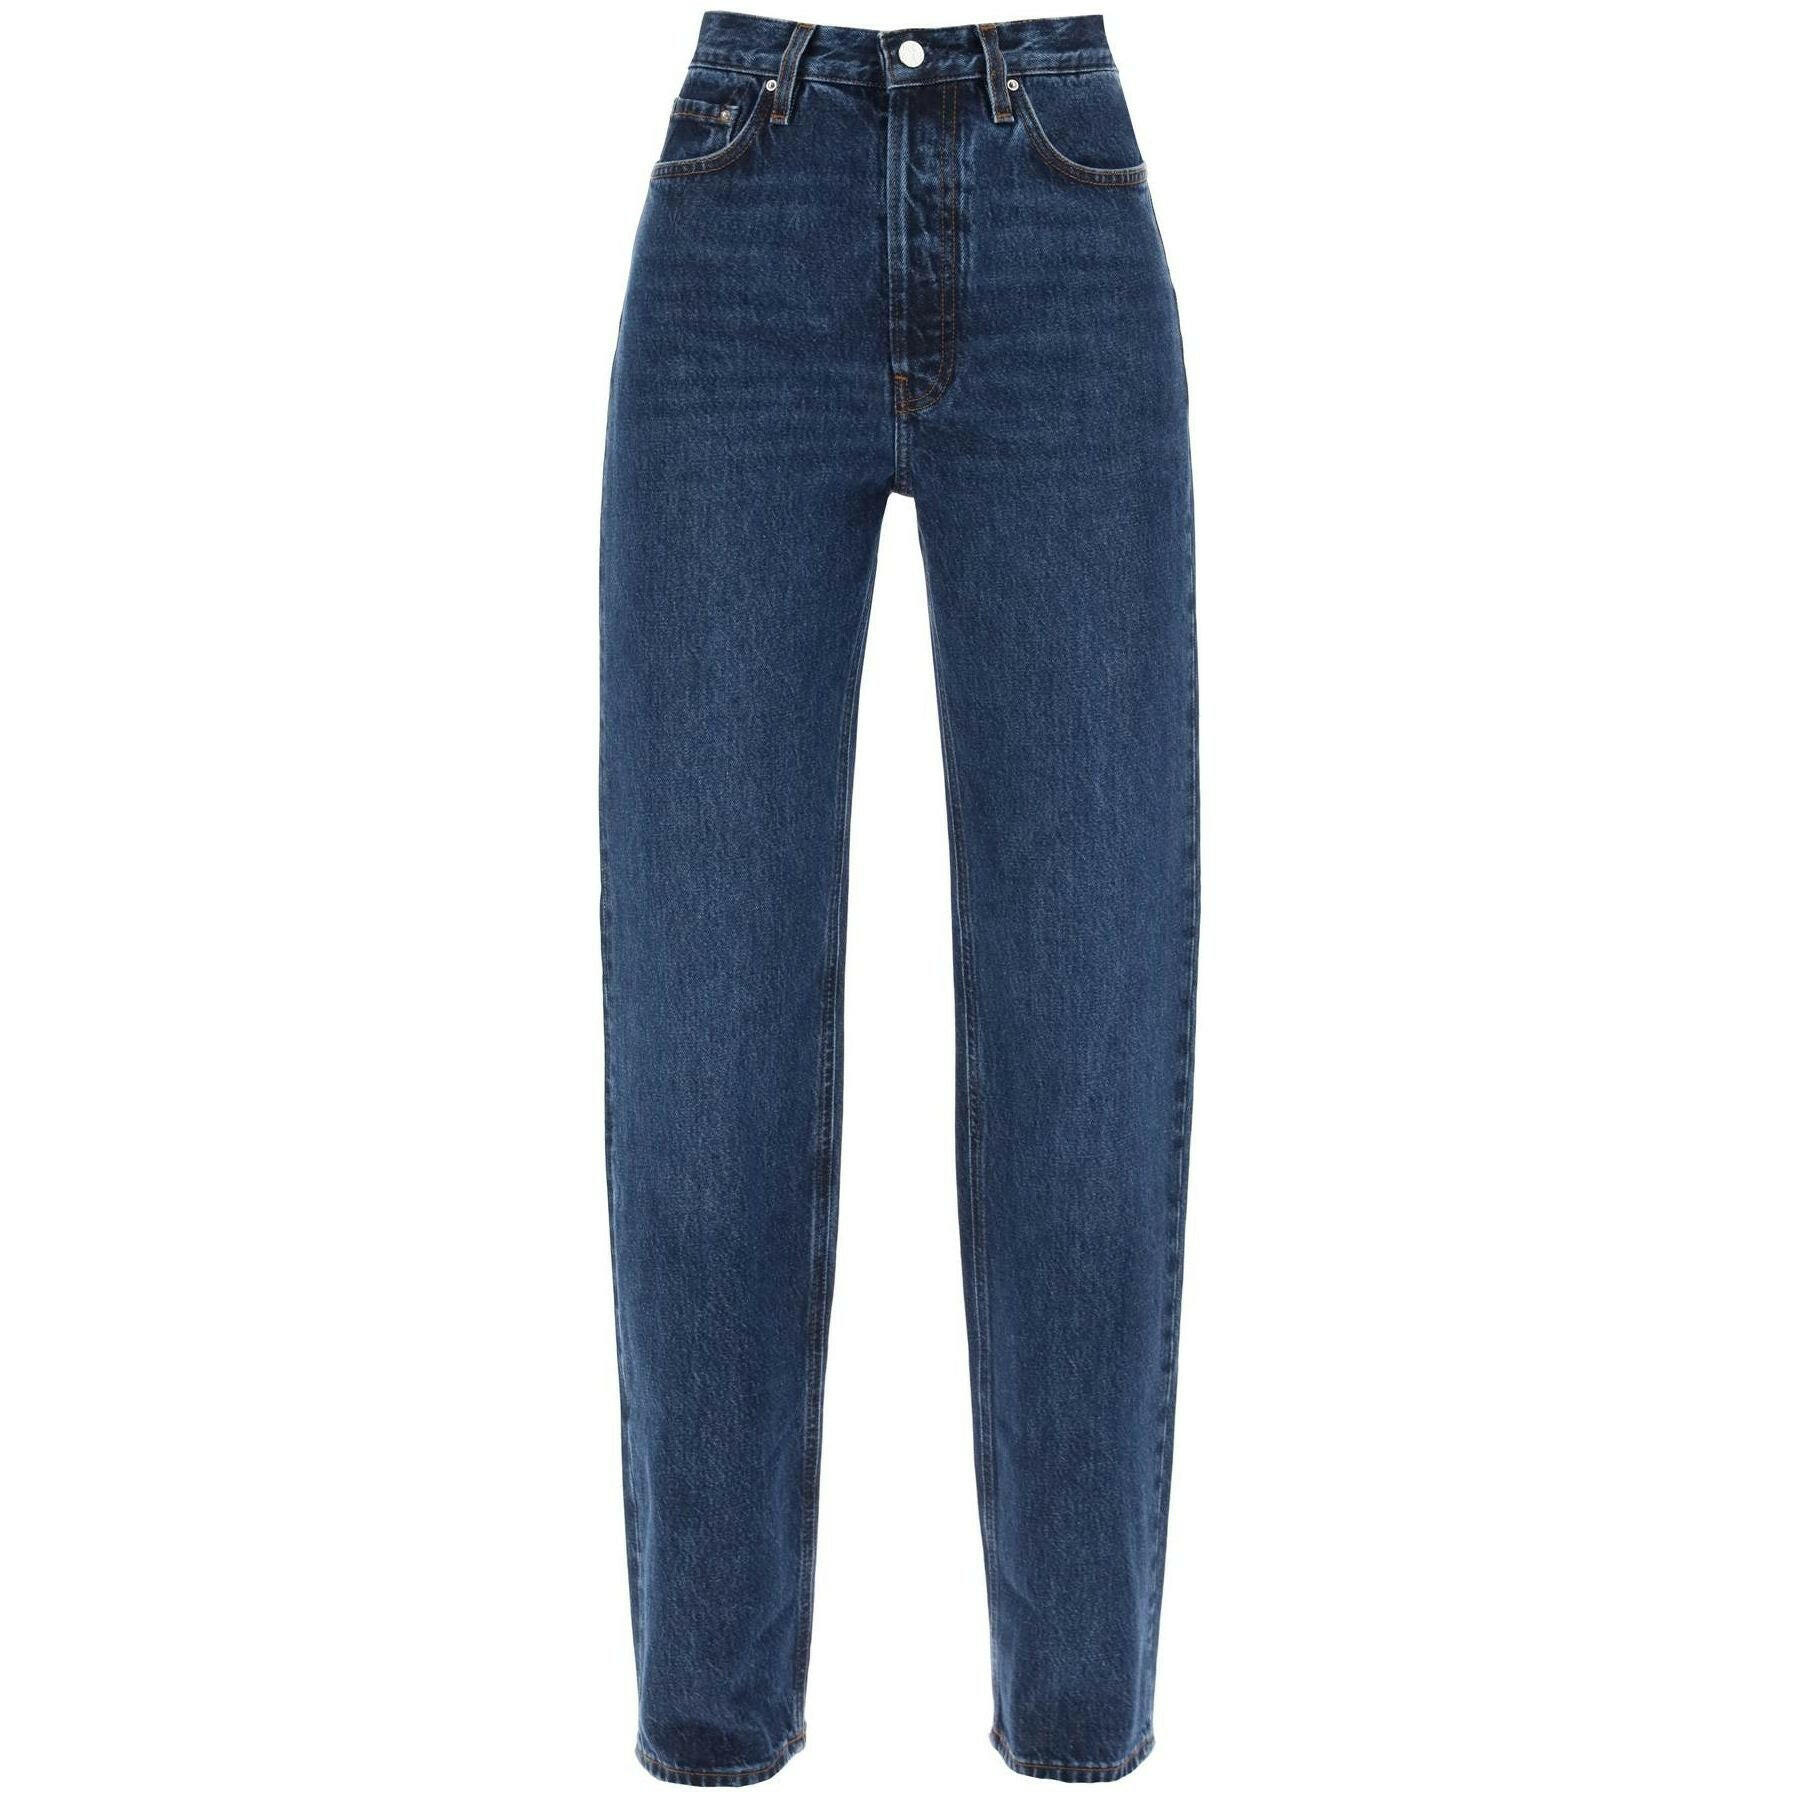 Organic Denim Classic Cut Full Length Jeans